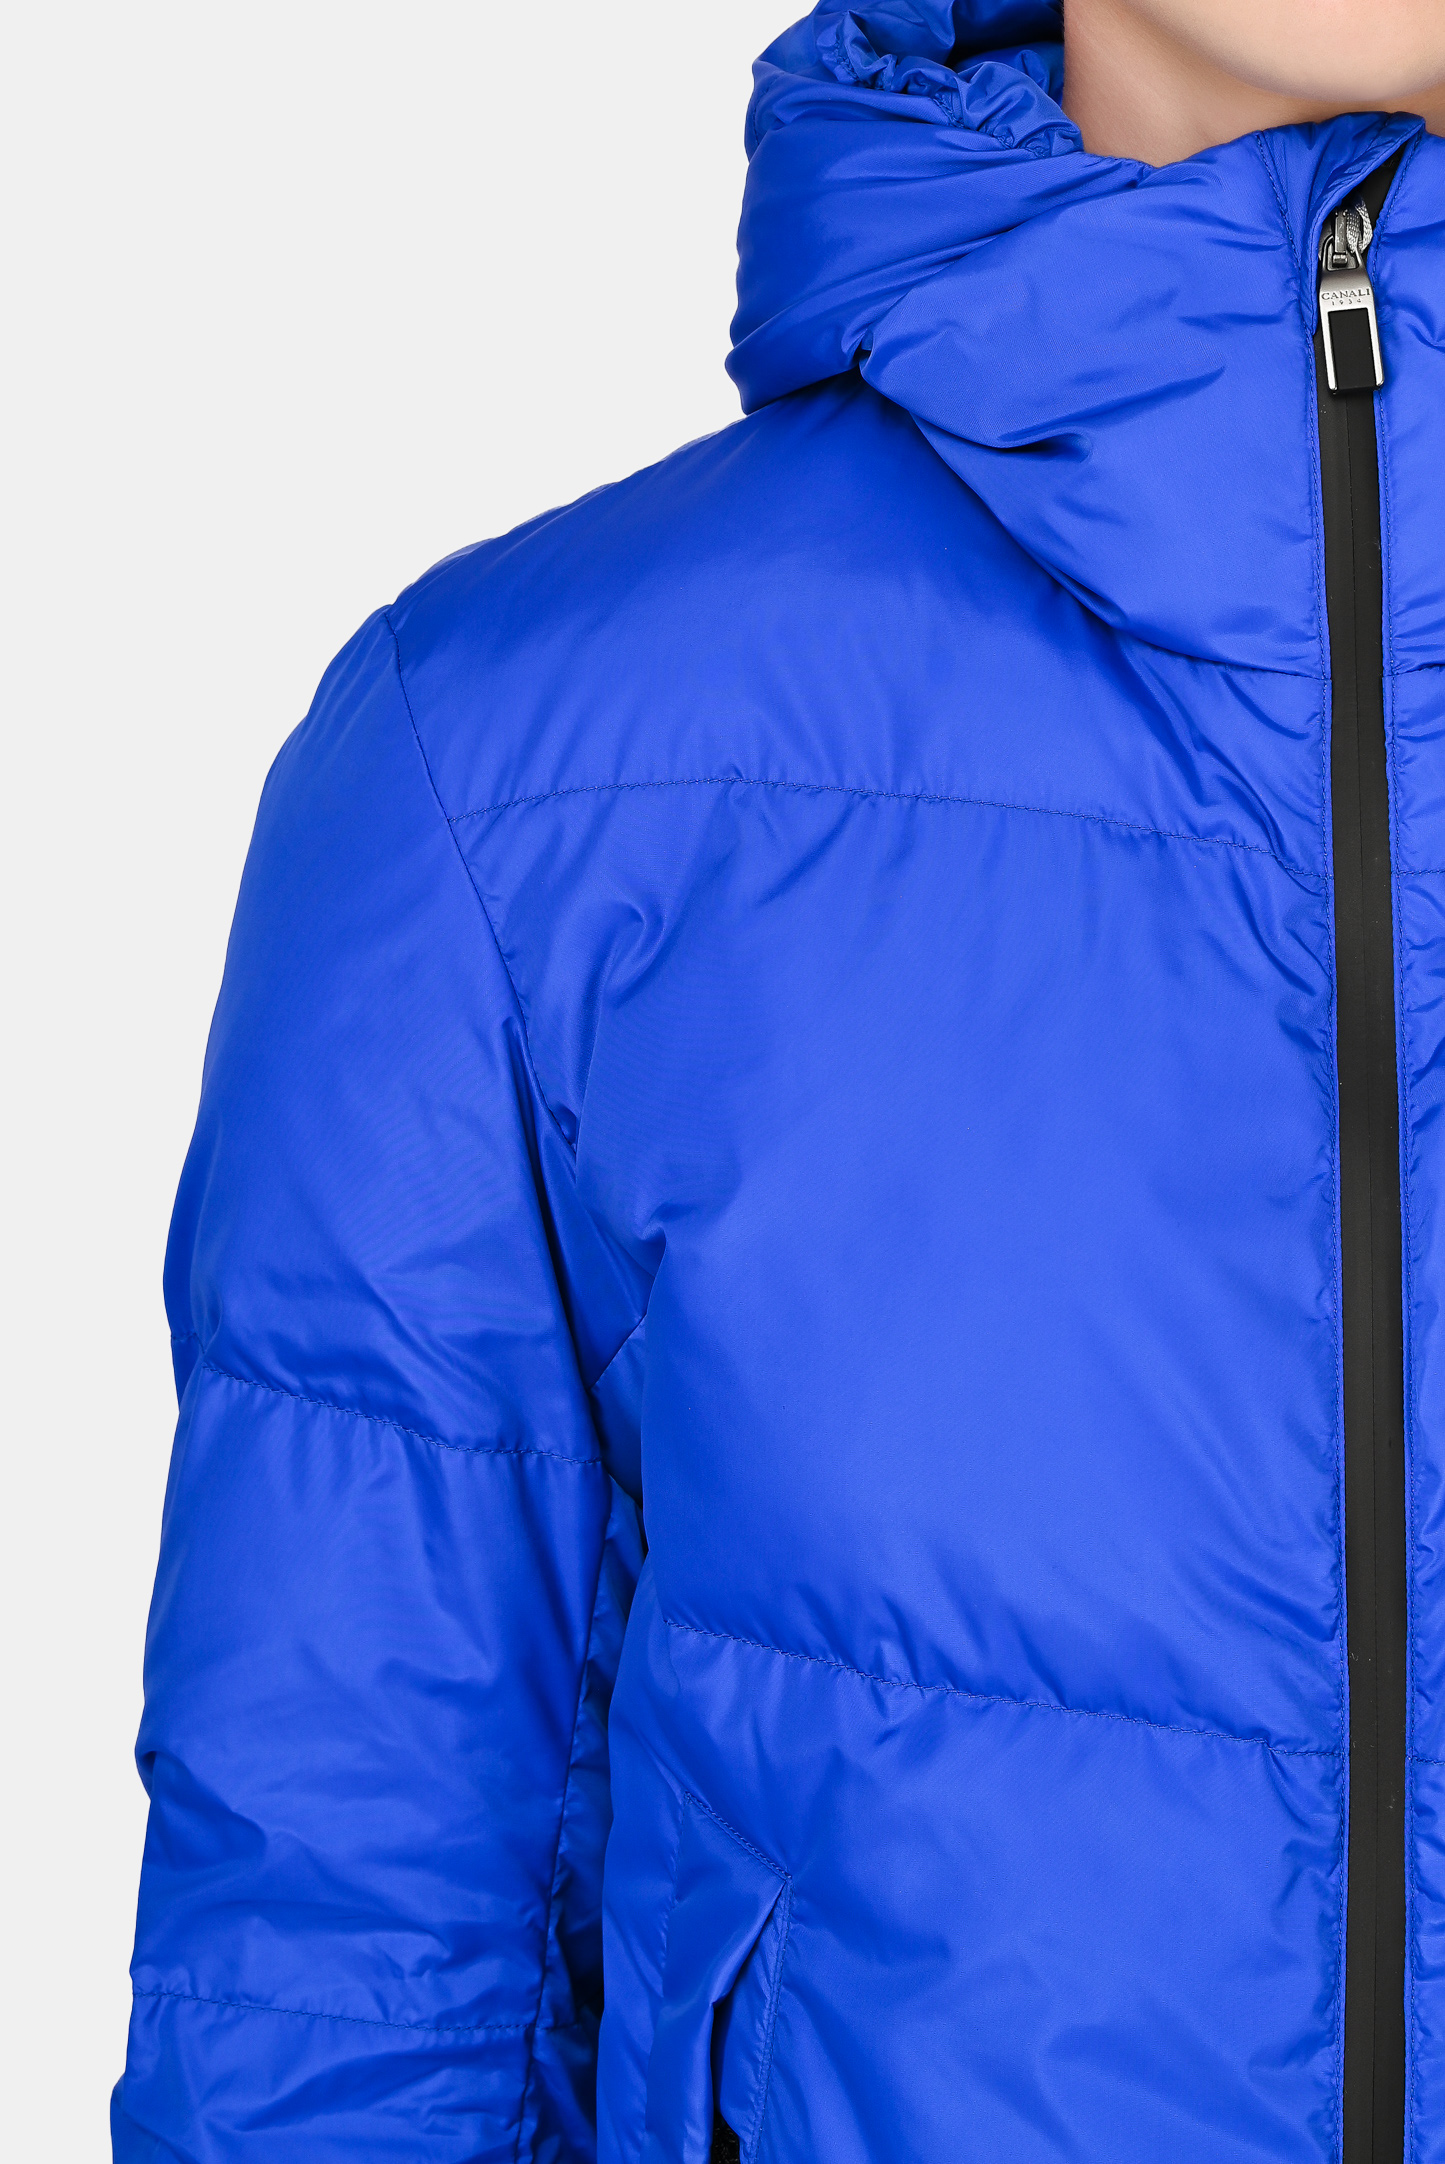 Куртка CANALI SY02125 O40670, цвет: Синий, Мужской